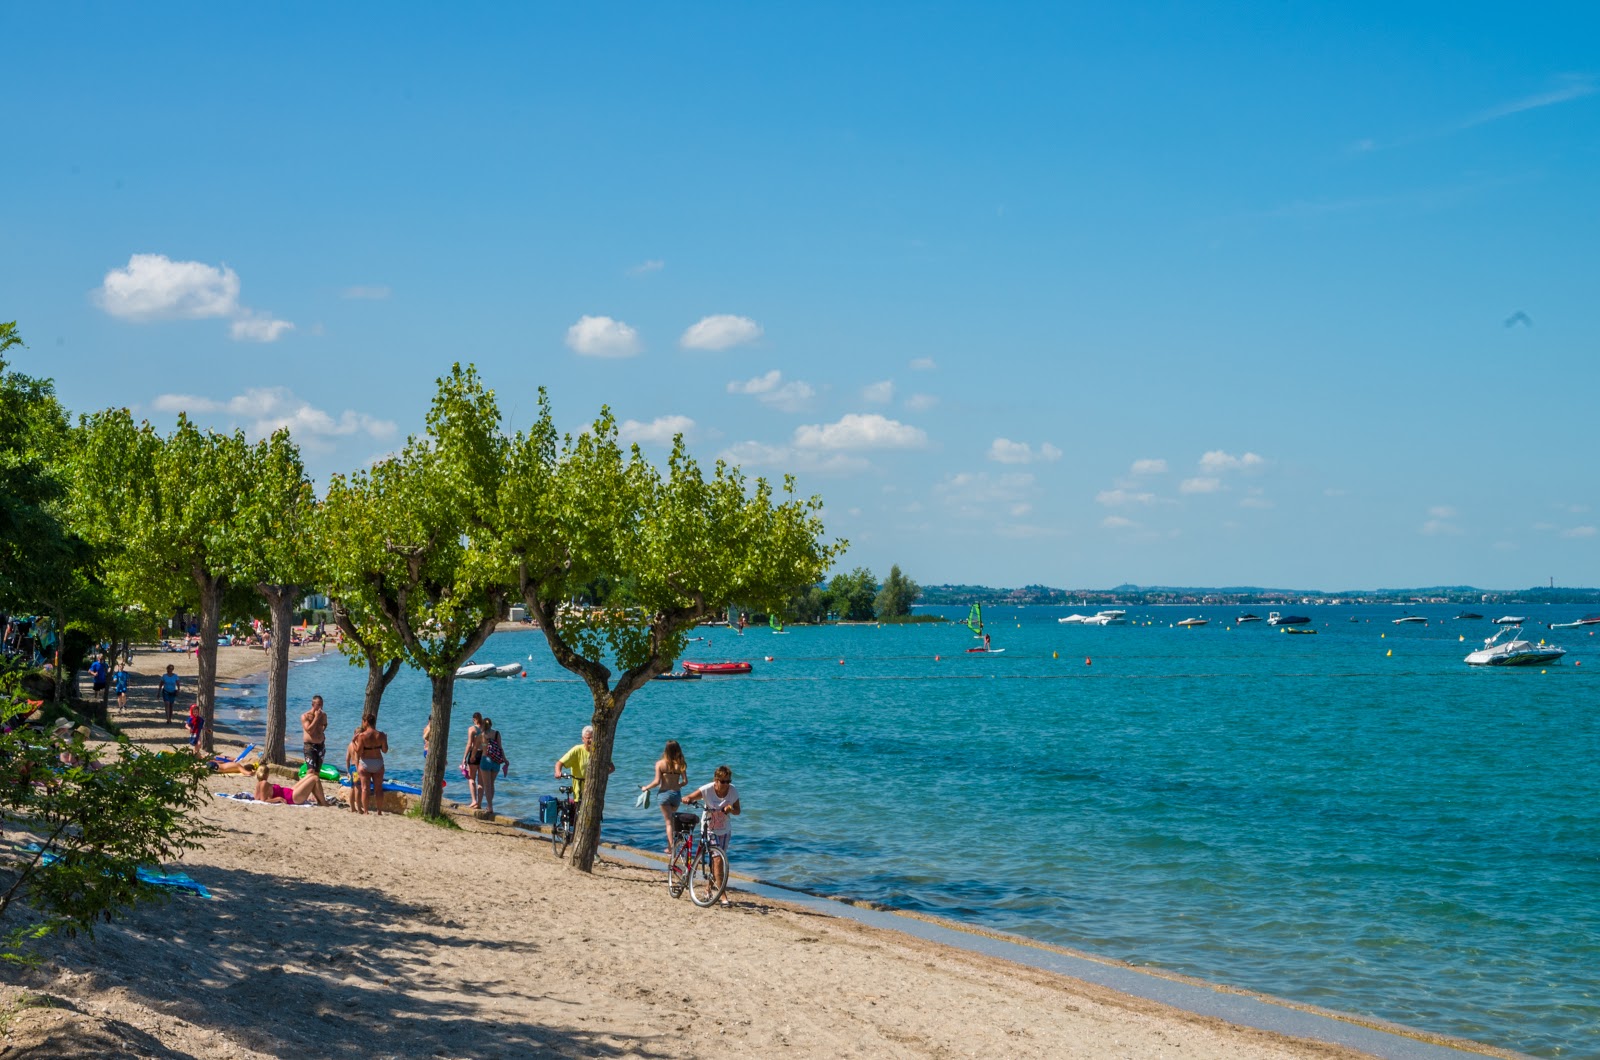 Spiaggia D'Oro'in fotoğrafı geniş plaj ile birlikte